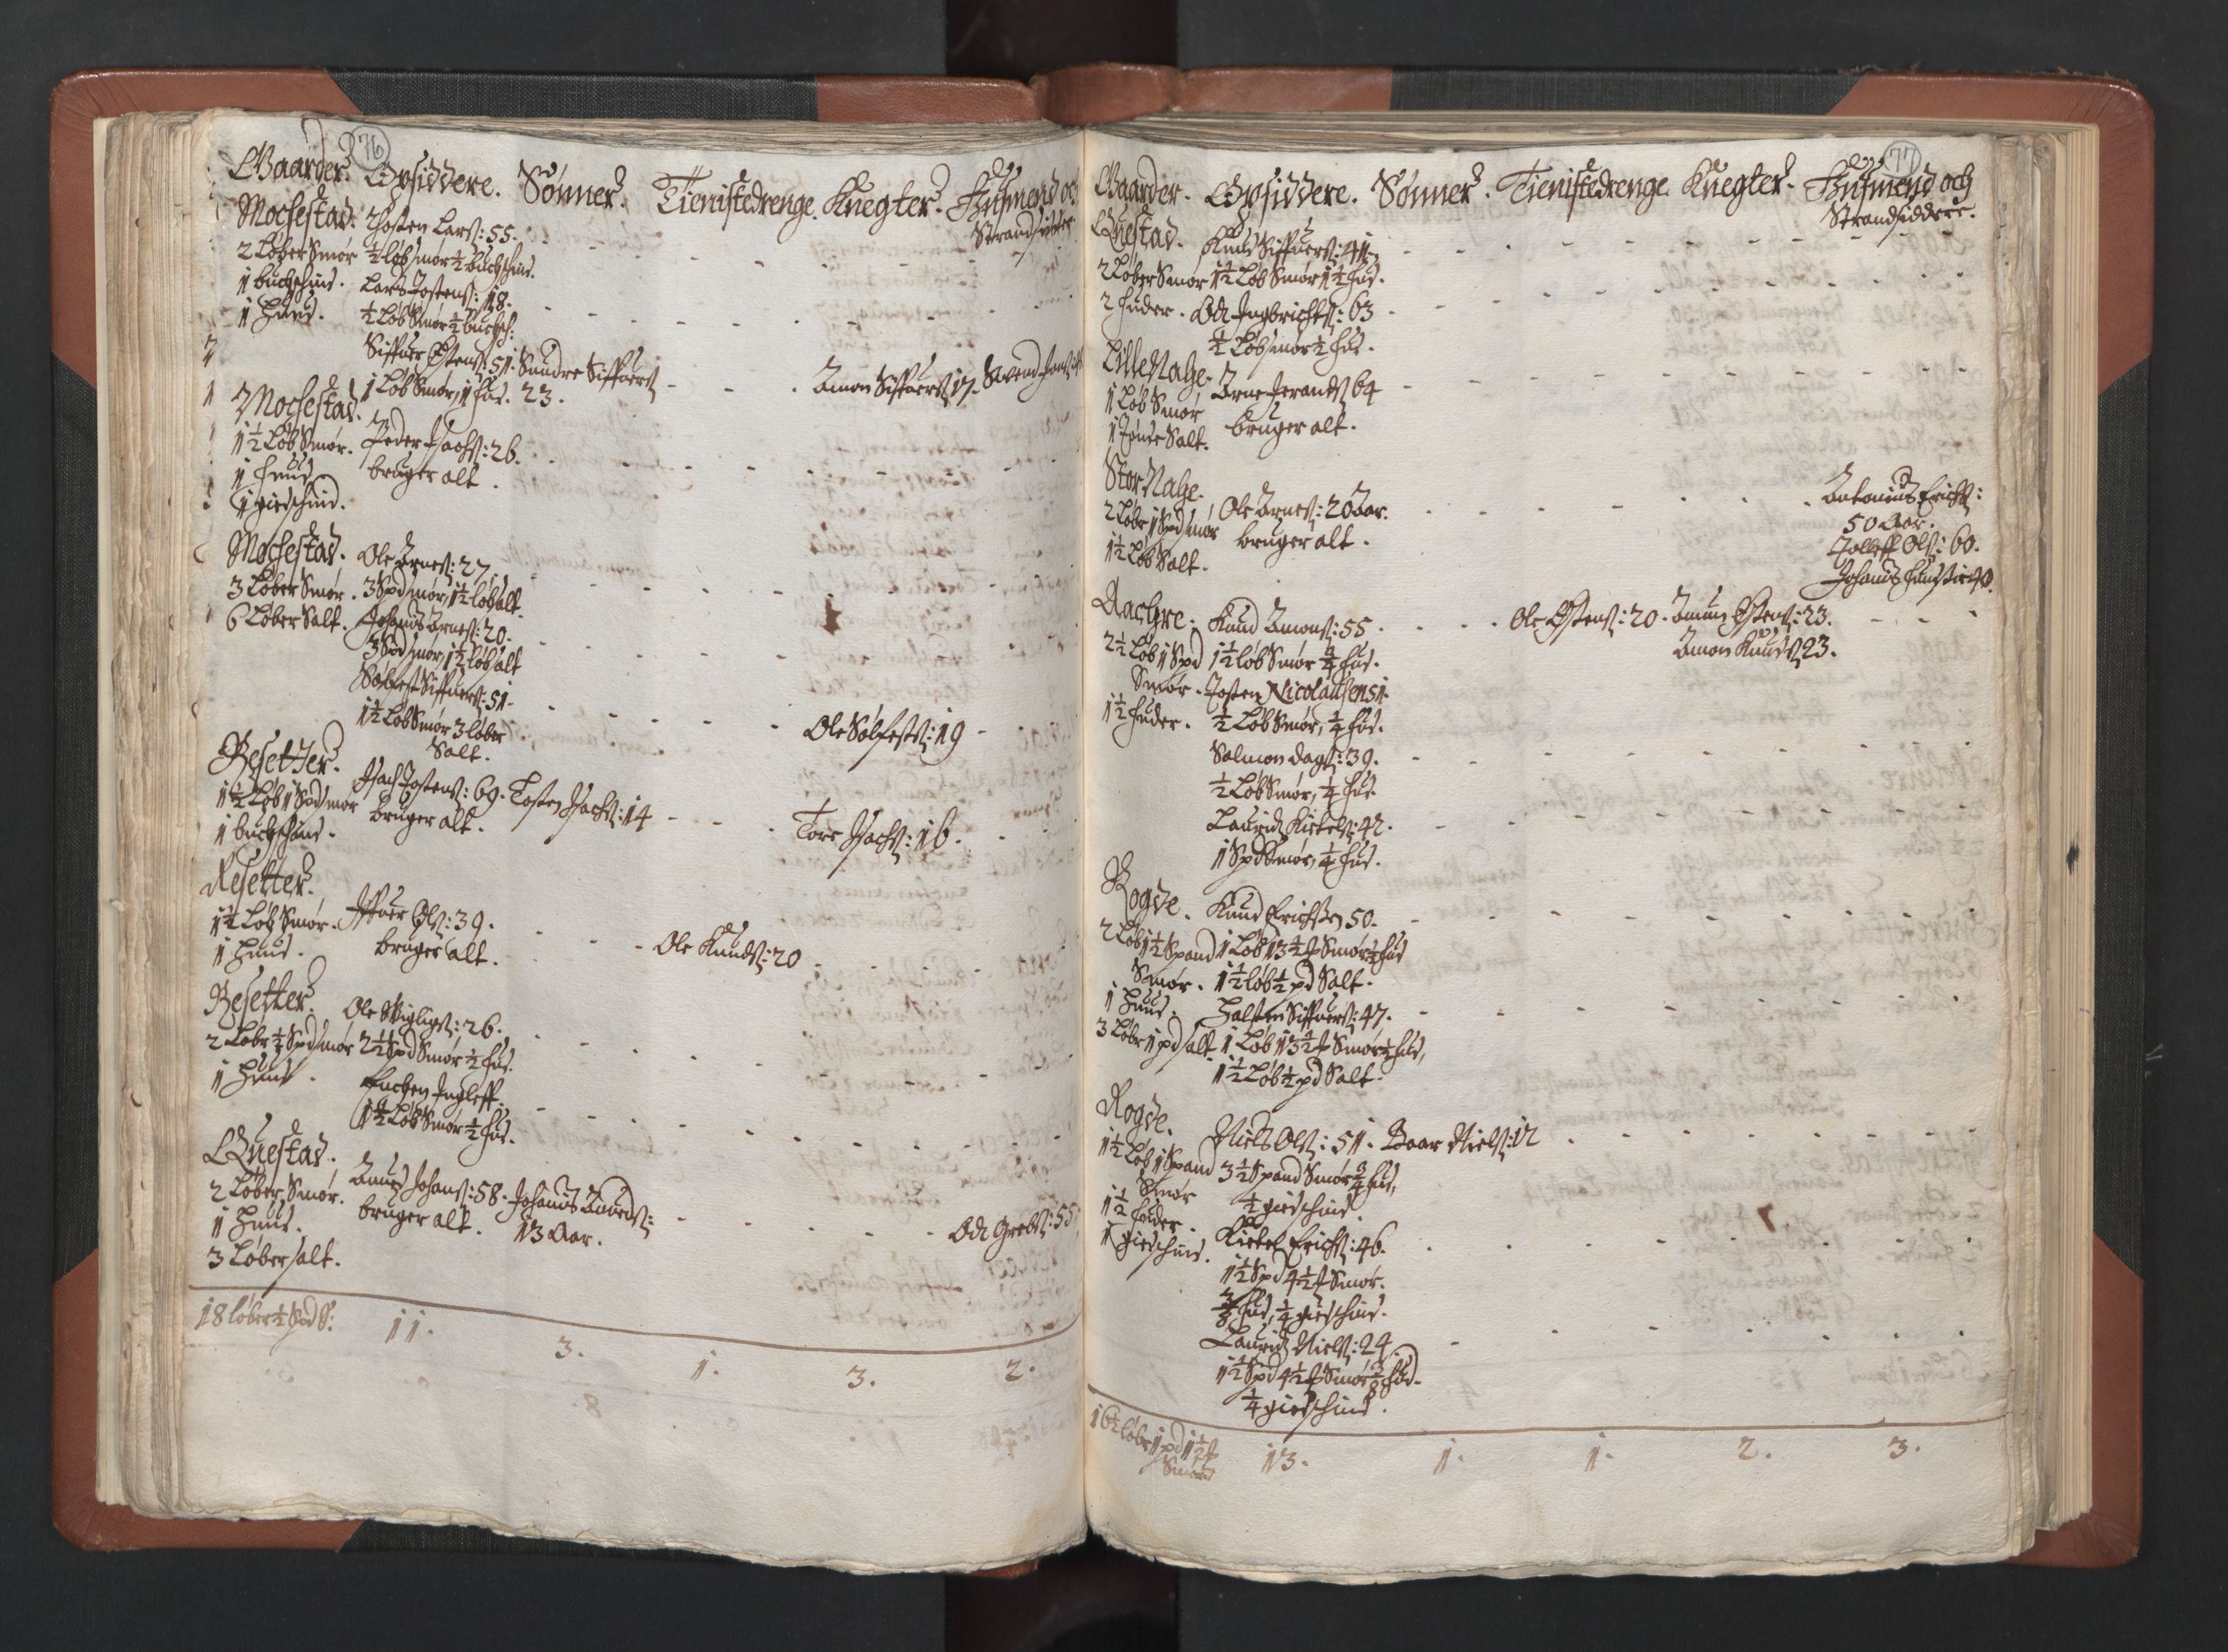 RA, Fogdenes og sorenskrivernes manntall 1664-1666, nr. 14: Hardanger len, Ytre Sogn fogderi og Indre Sogn fogderi, 1664-1665, s. 76-77